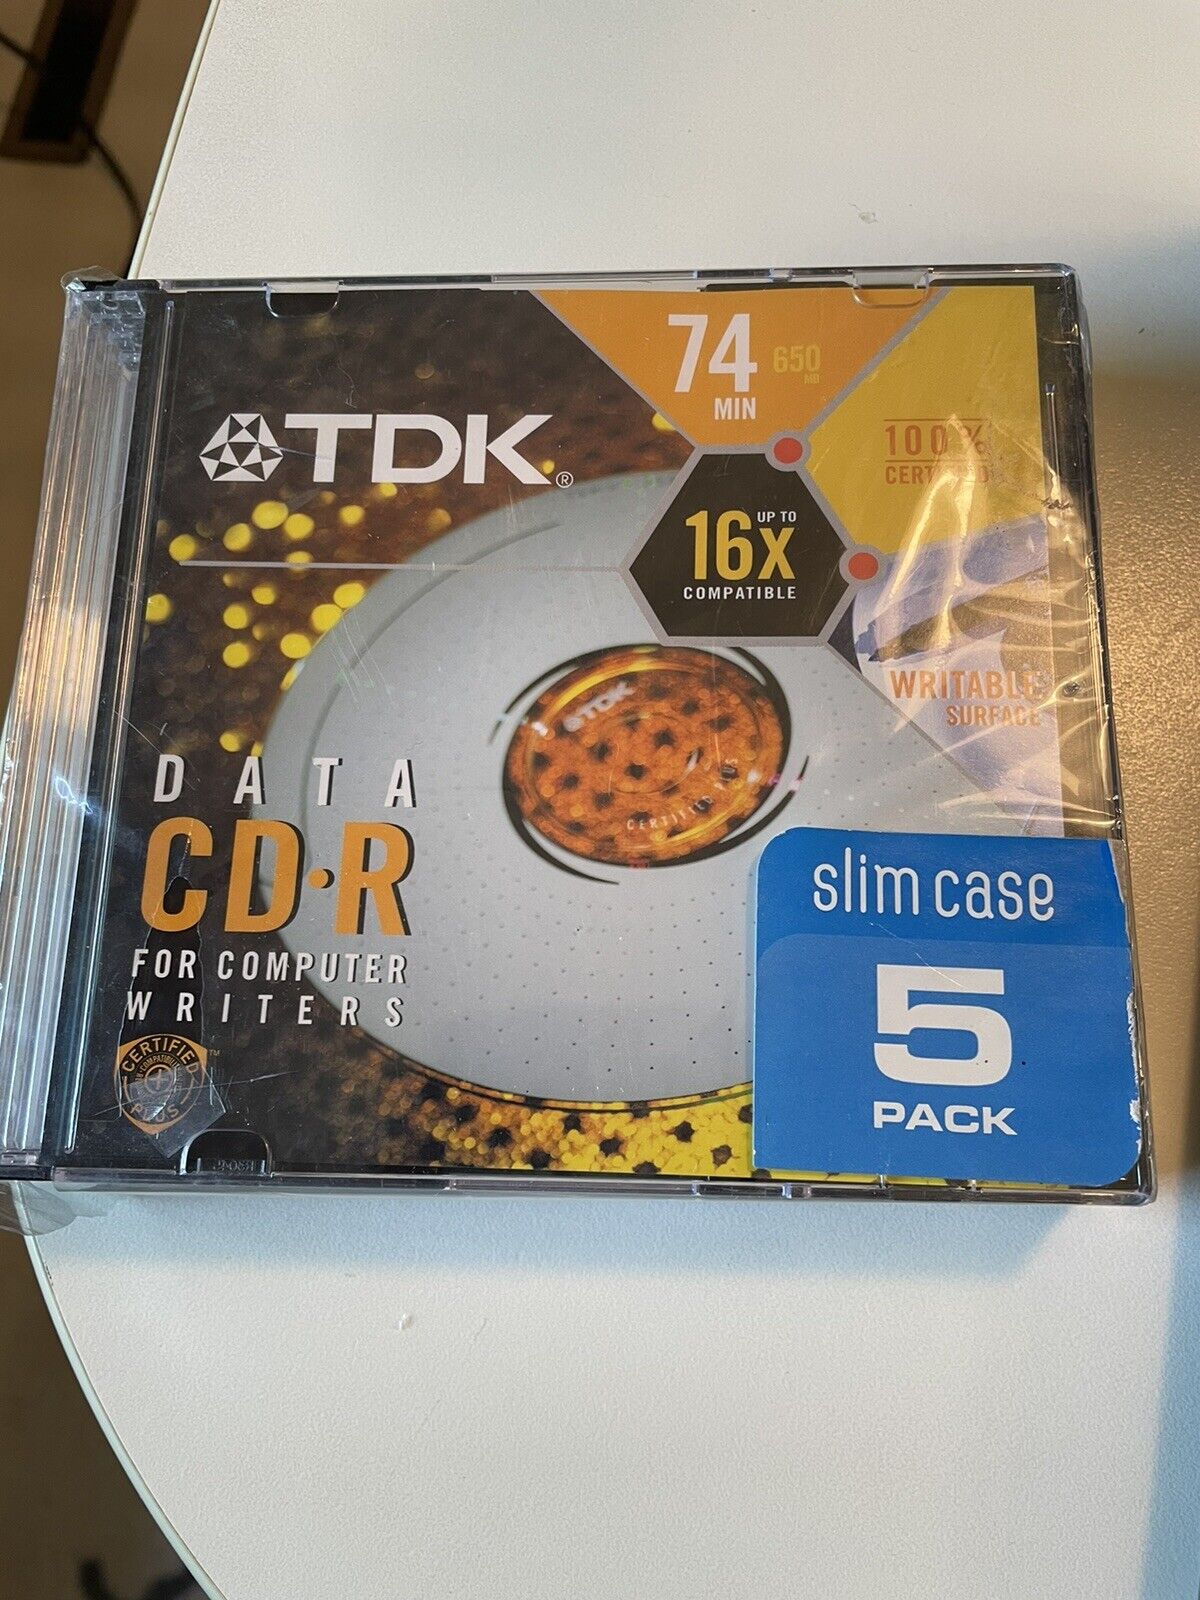 TDK Data CD.R For Computer Writers Slim Case 5 Pack CD 74 Min 650 MB